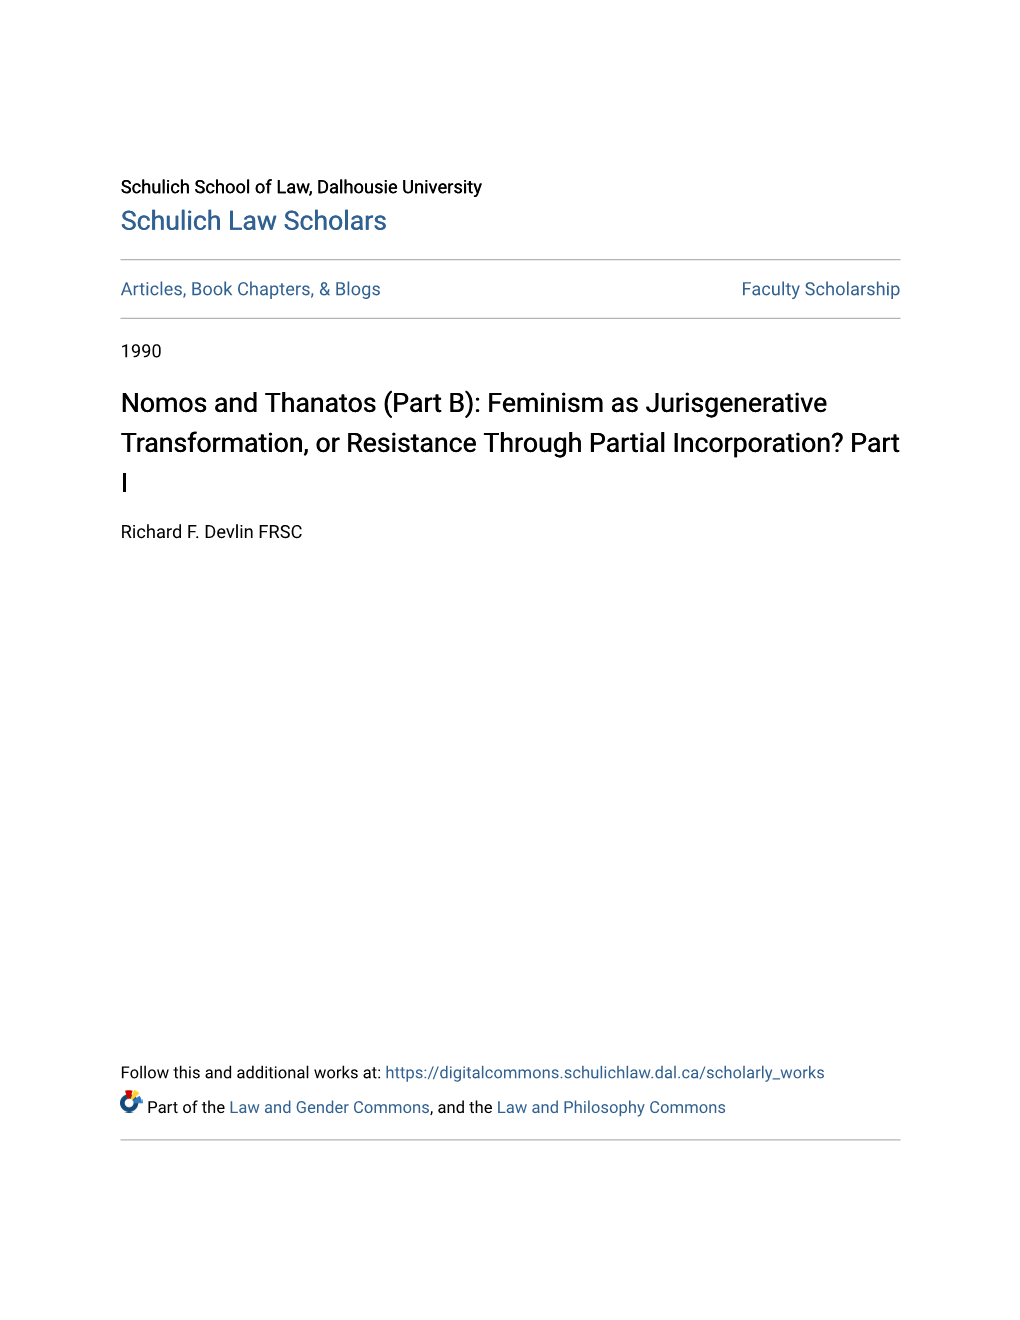 (Part B): Feminism As Jurisgenerative Transformation, Or Resistance Through Partial Incorporation? Part I